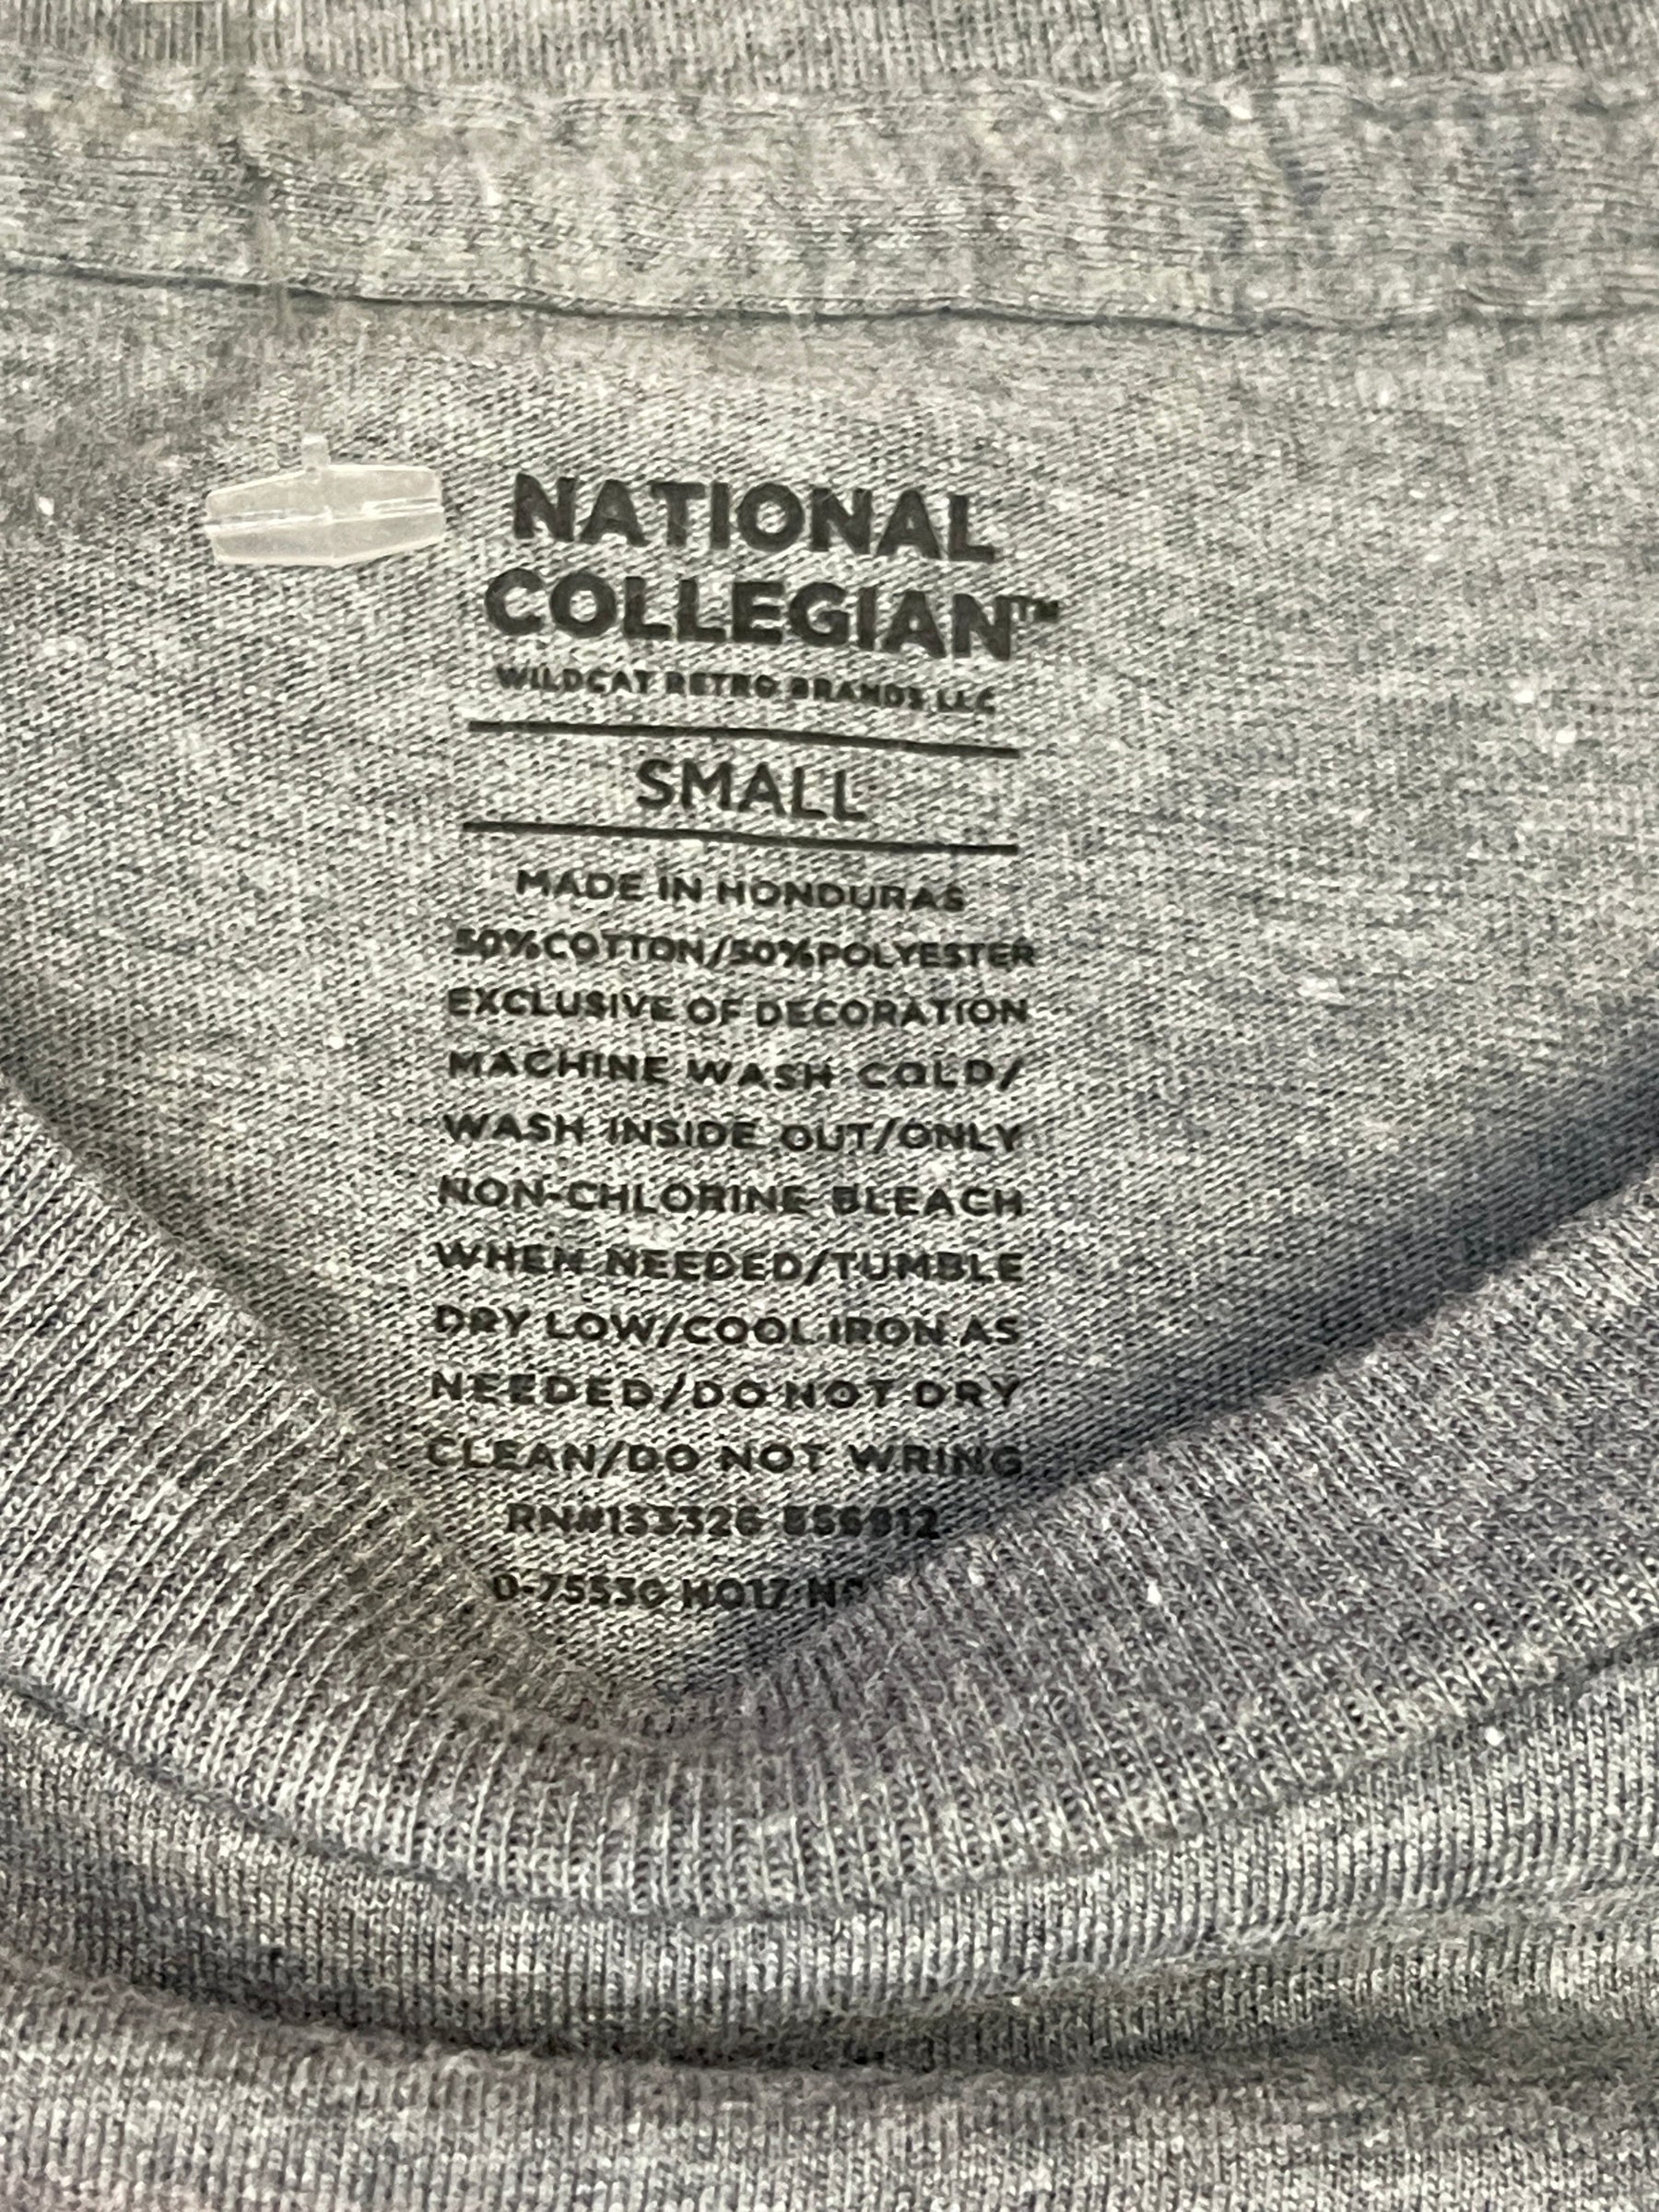 NCAA Wisconsin Badgers Heathered Grey T-Shirt Youth Small